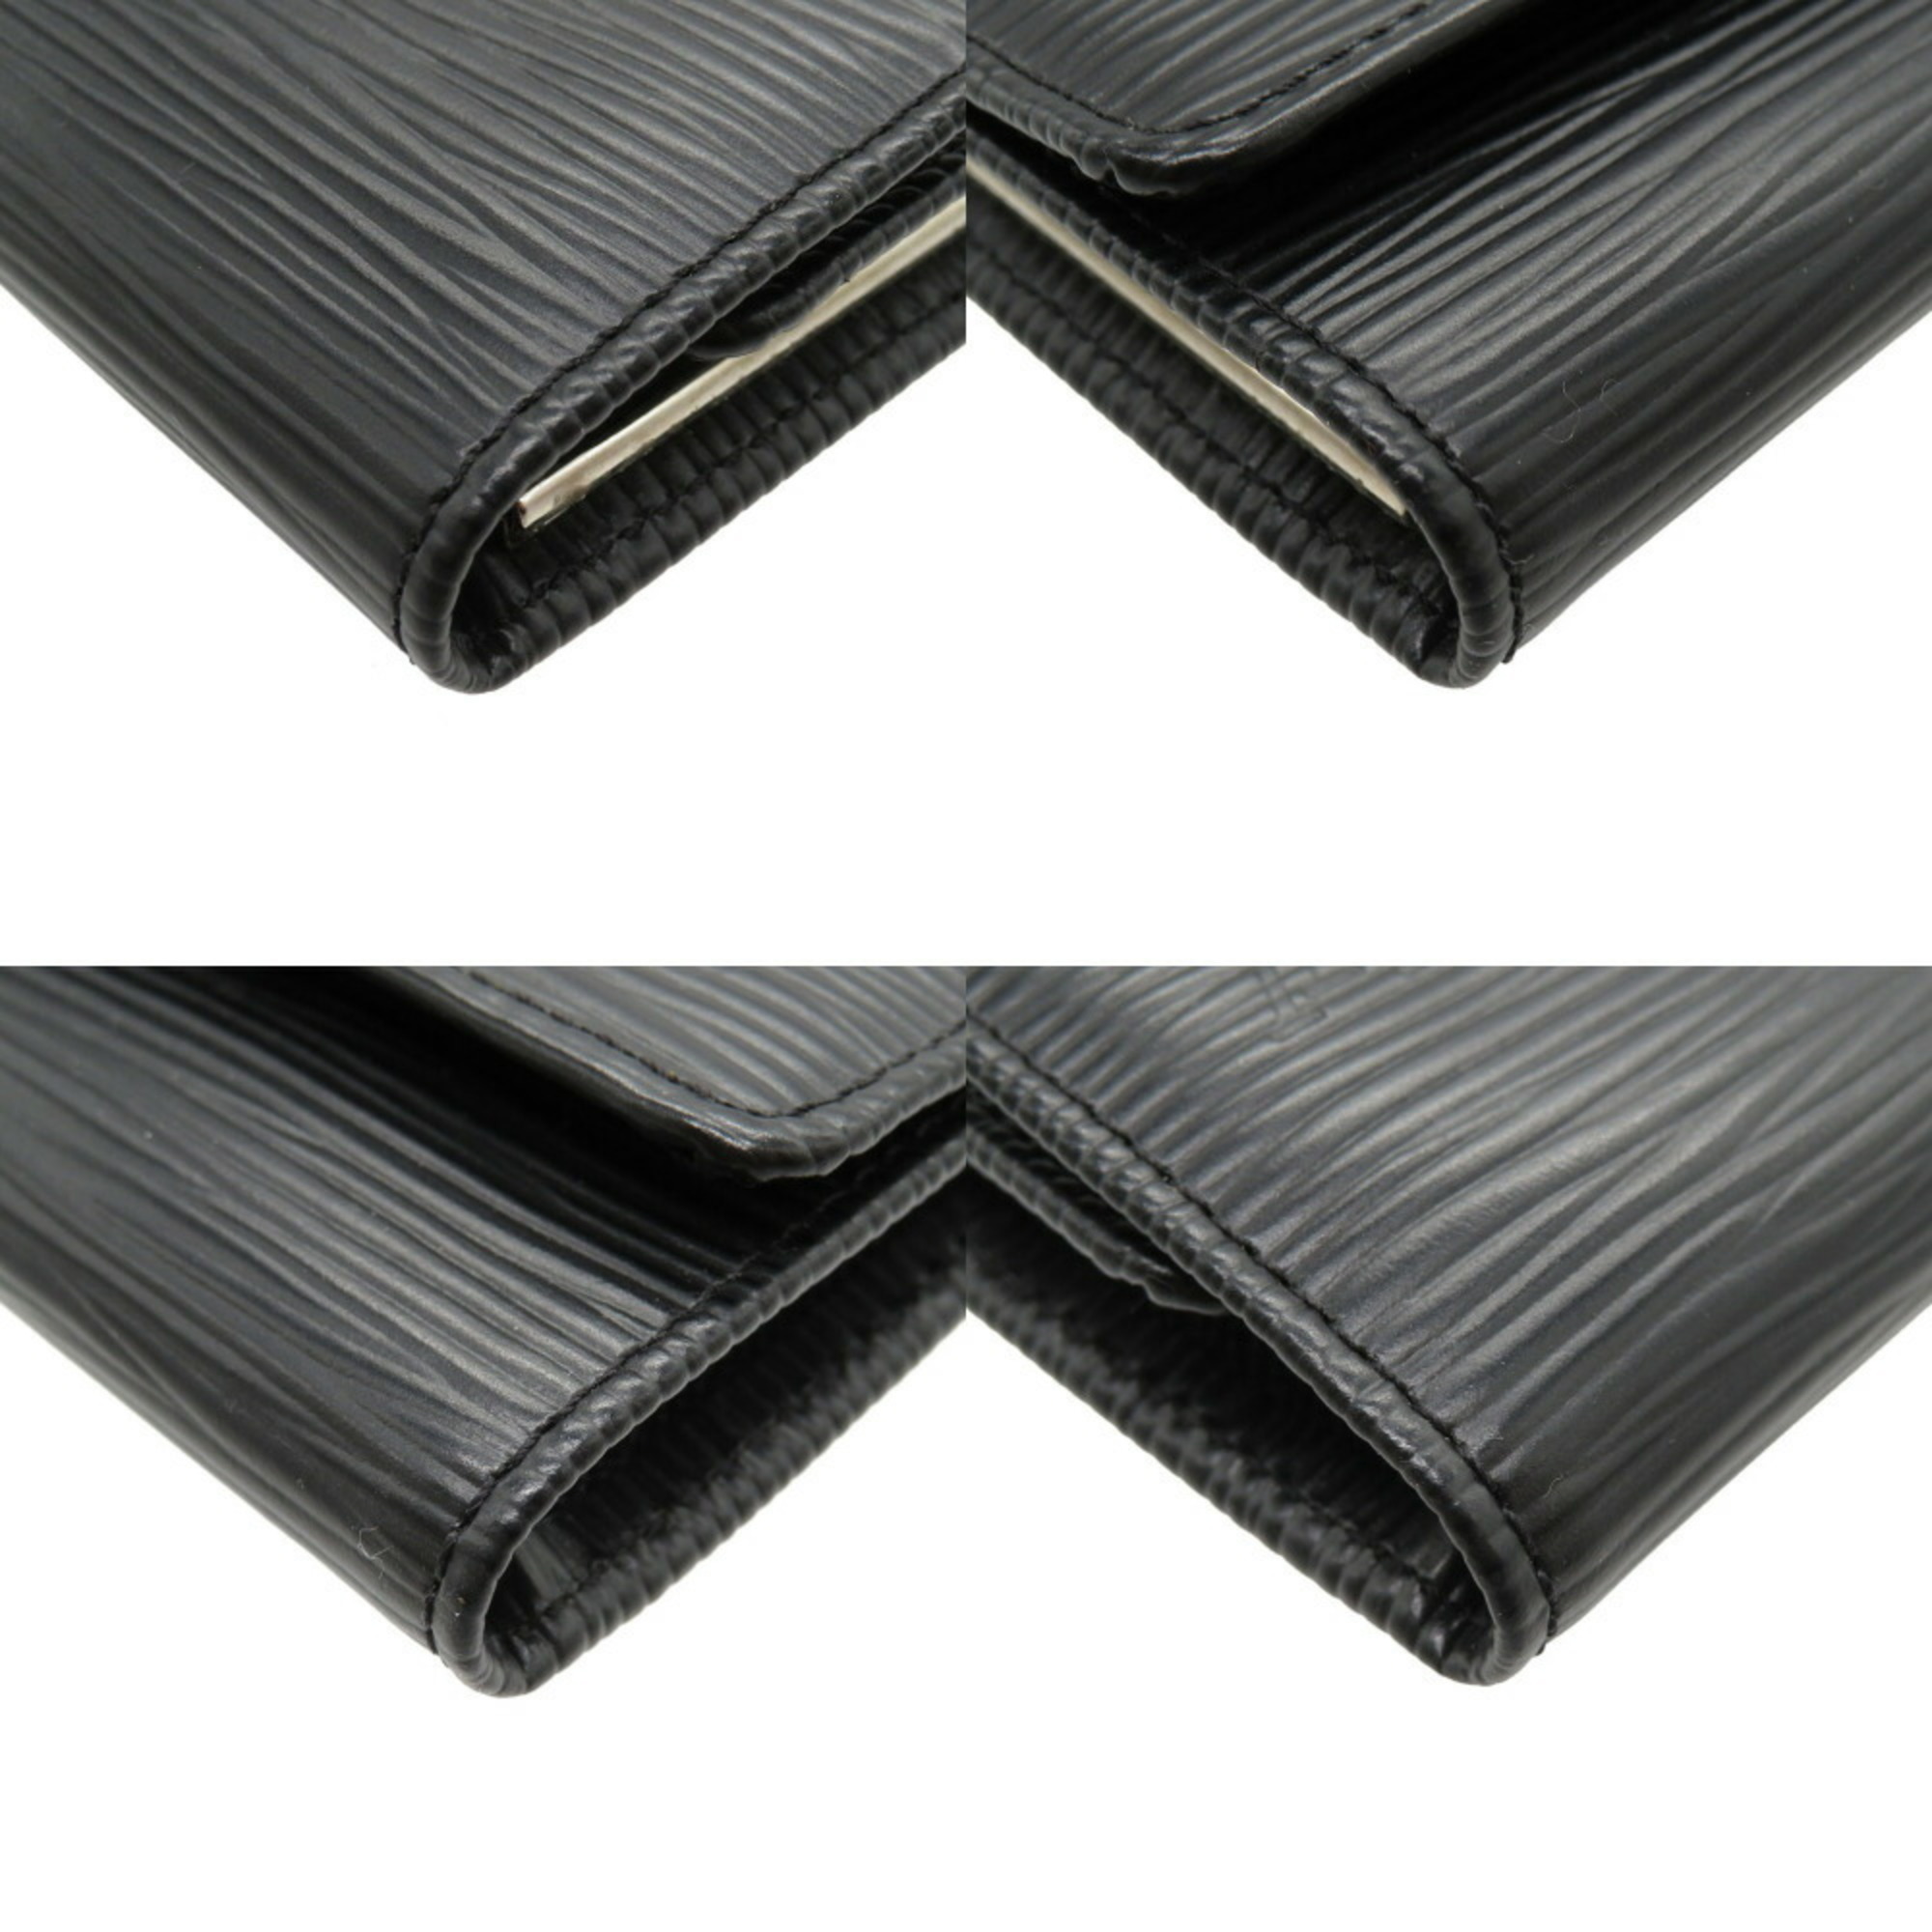 Louis Vuitton Multicle 6 Epi Black M63812 6-ring key case LV 0199 LOUIS VUITTON